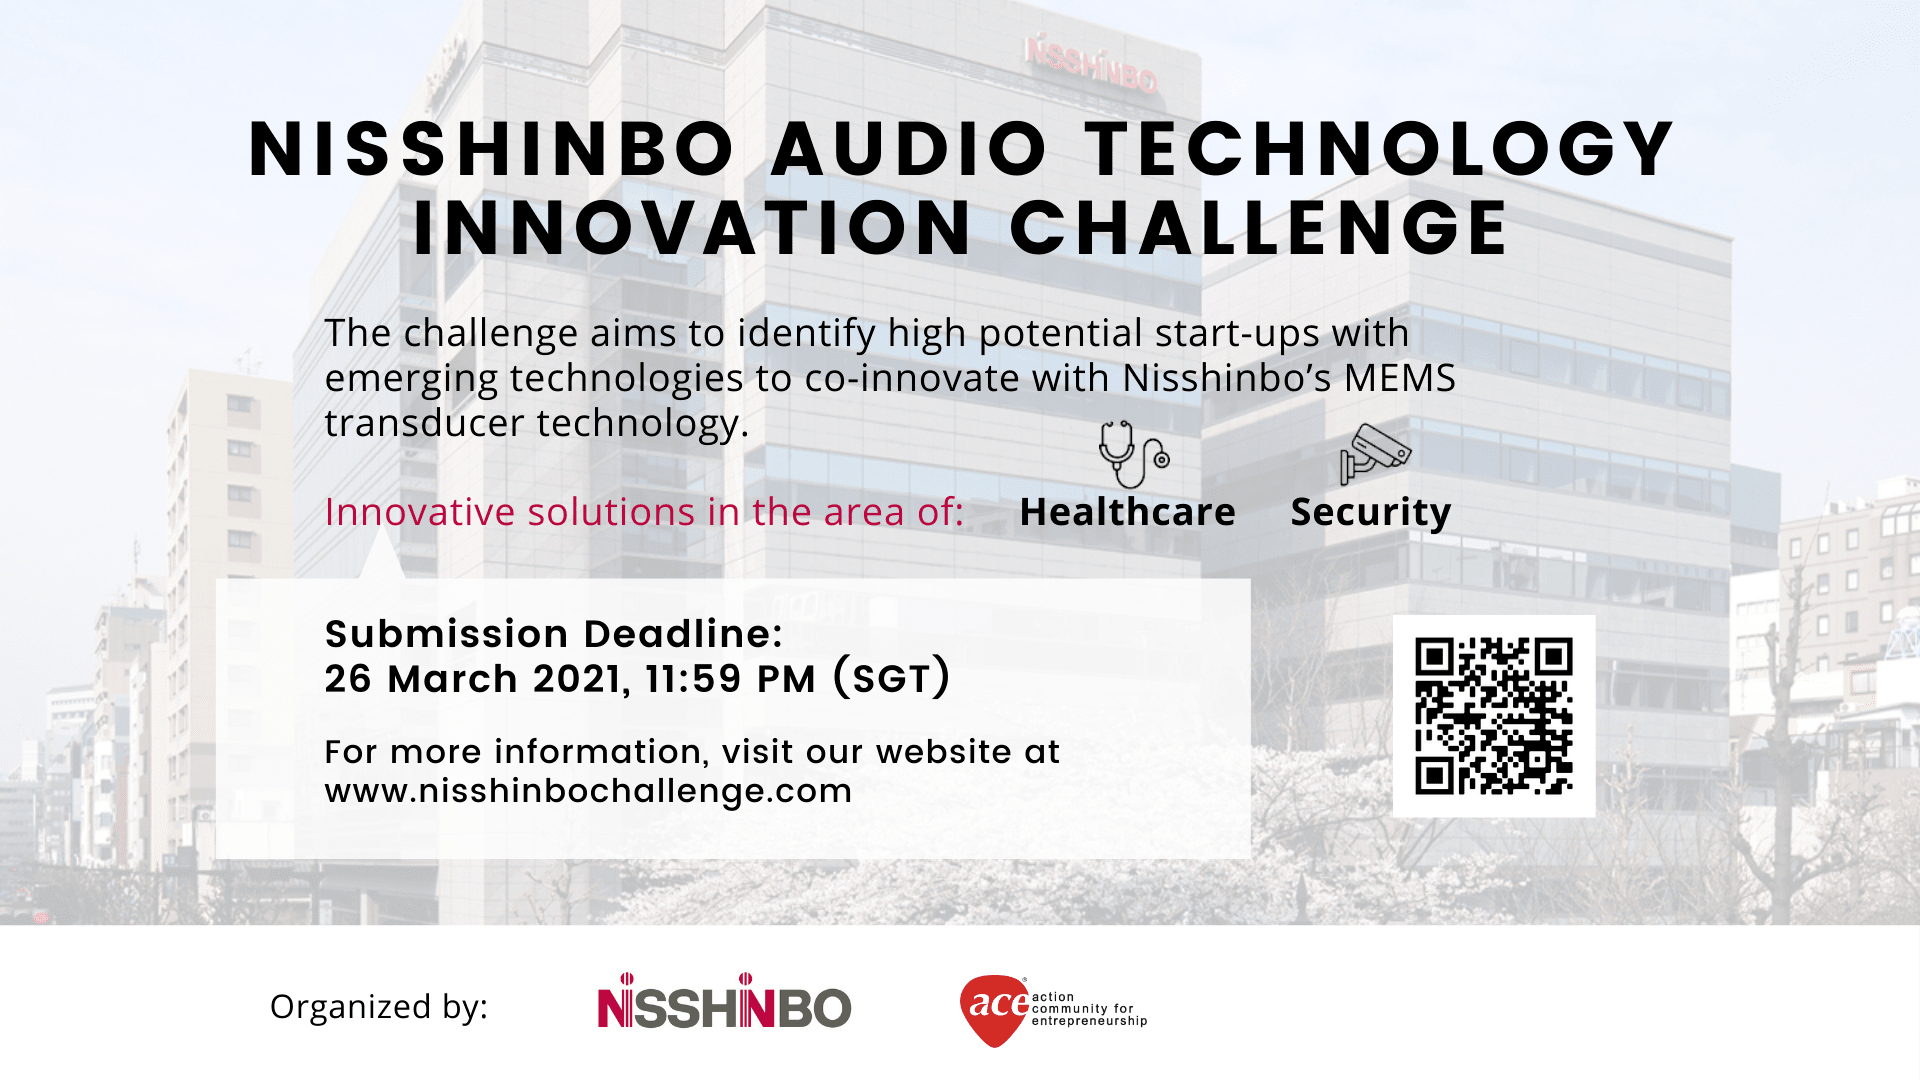 Nisshinbo Audio Technology Innovation Challenge